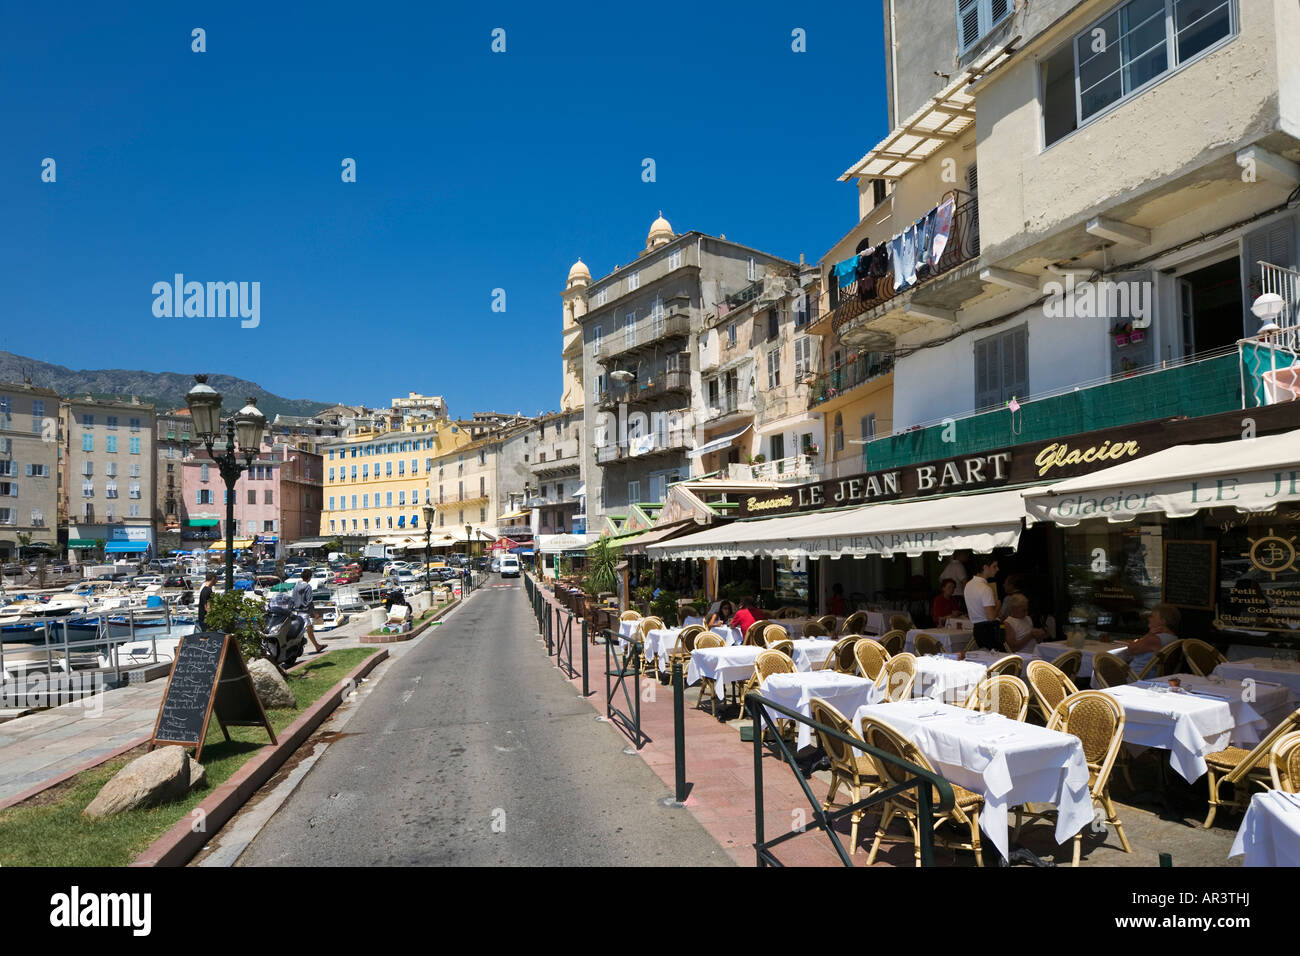 Cafe in the Vieux Port, Terra Vecchia, Bastia, Corsica, France